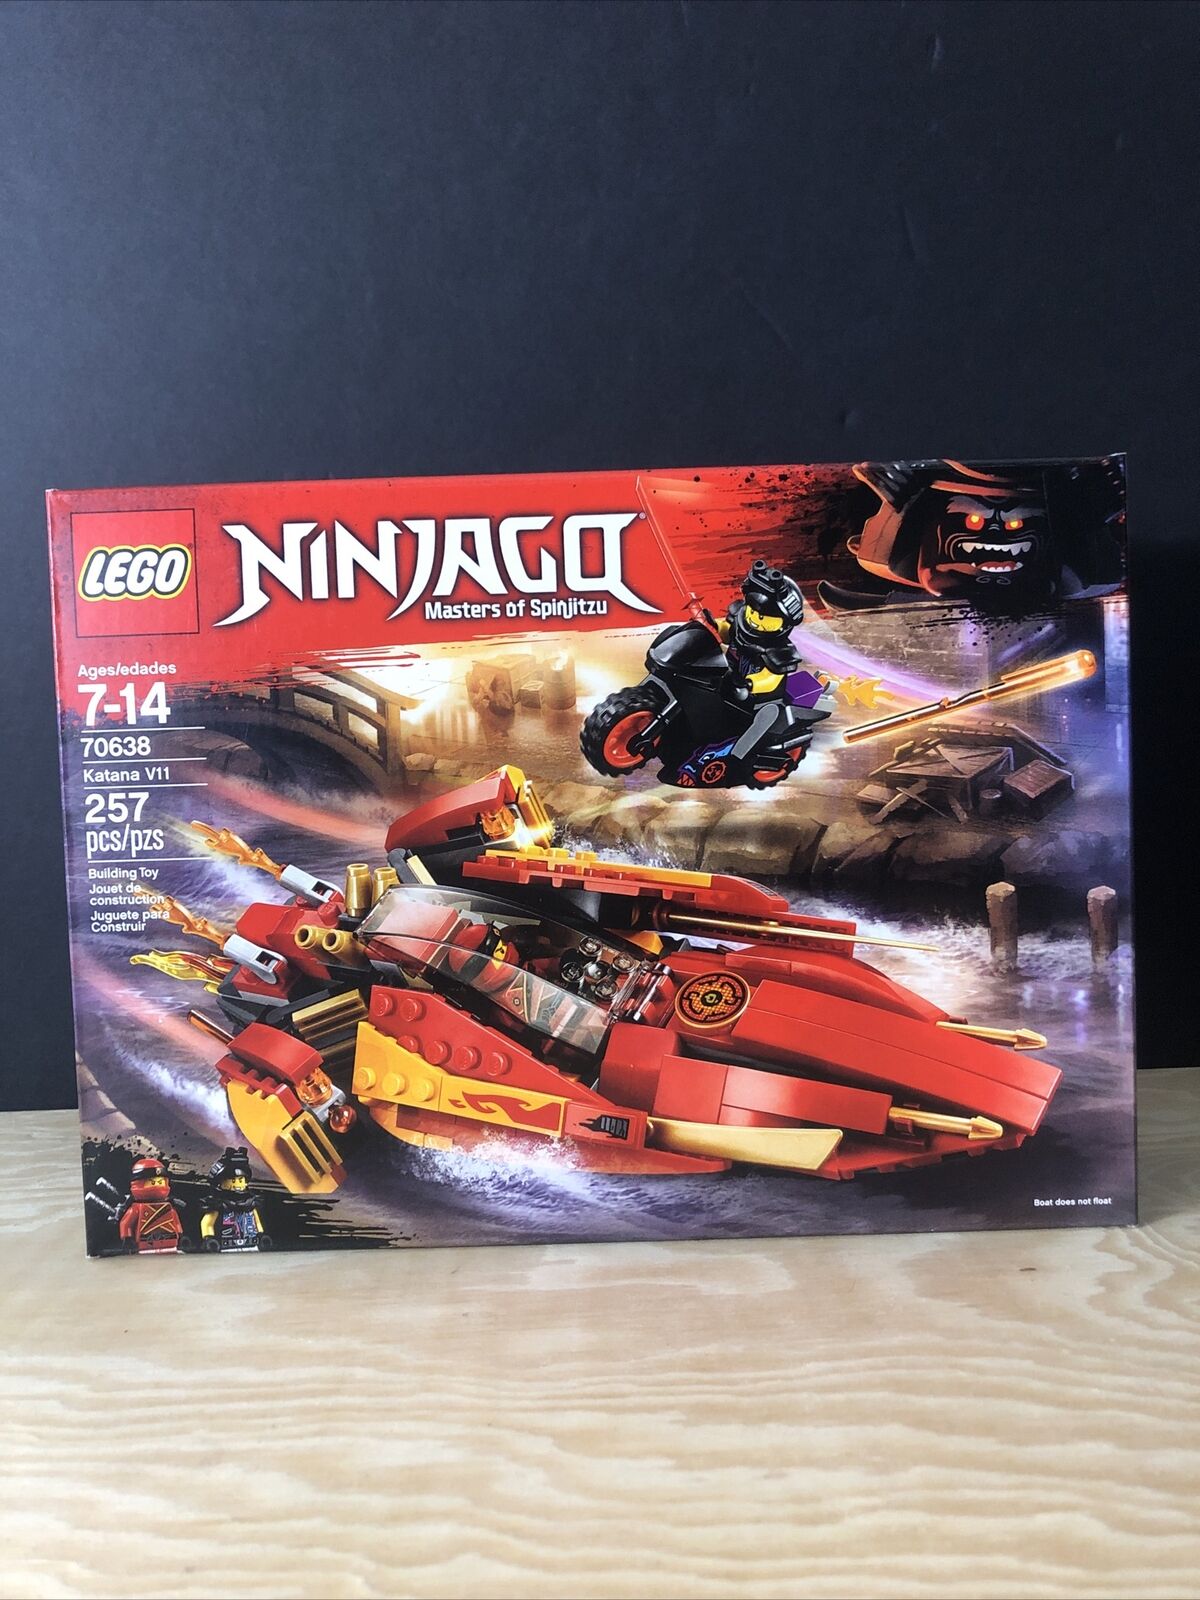 LEGO 70638 Ninjago Master of Spinjitzu Katana V11 (257 Pieces) - Brand New